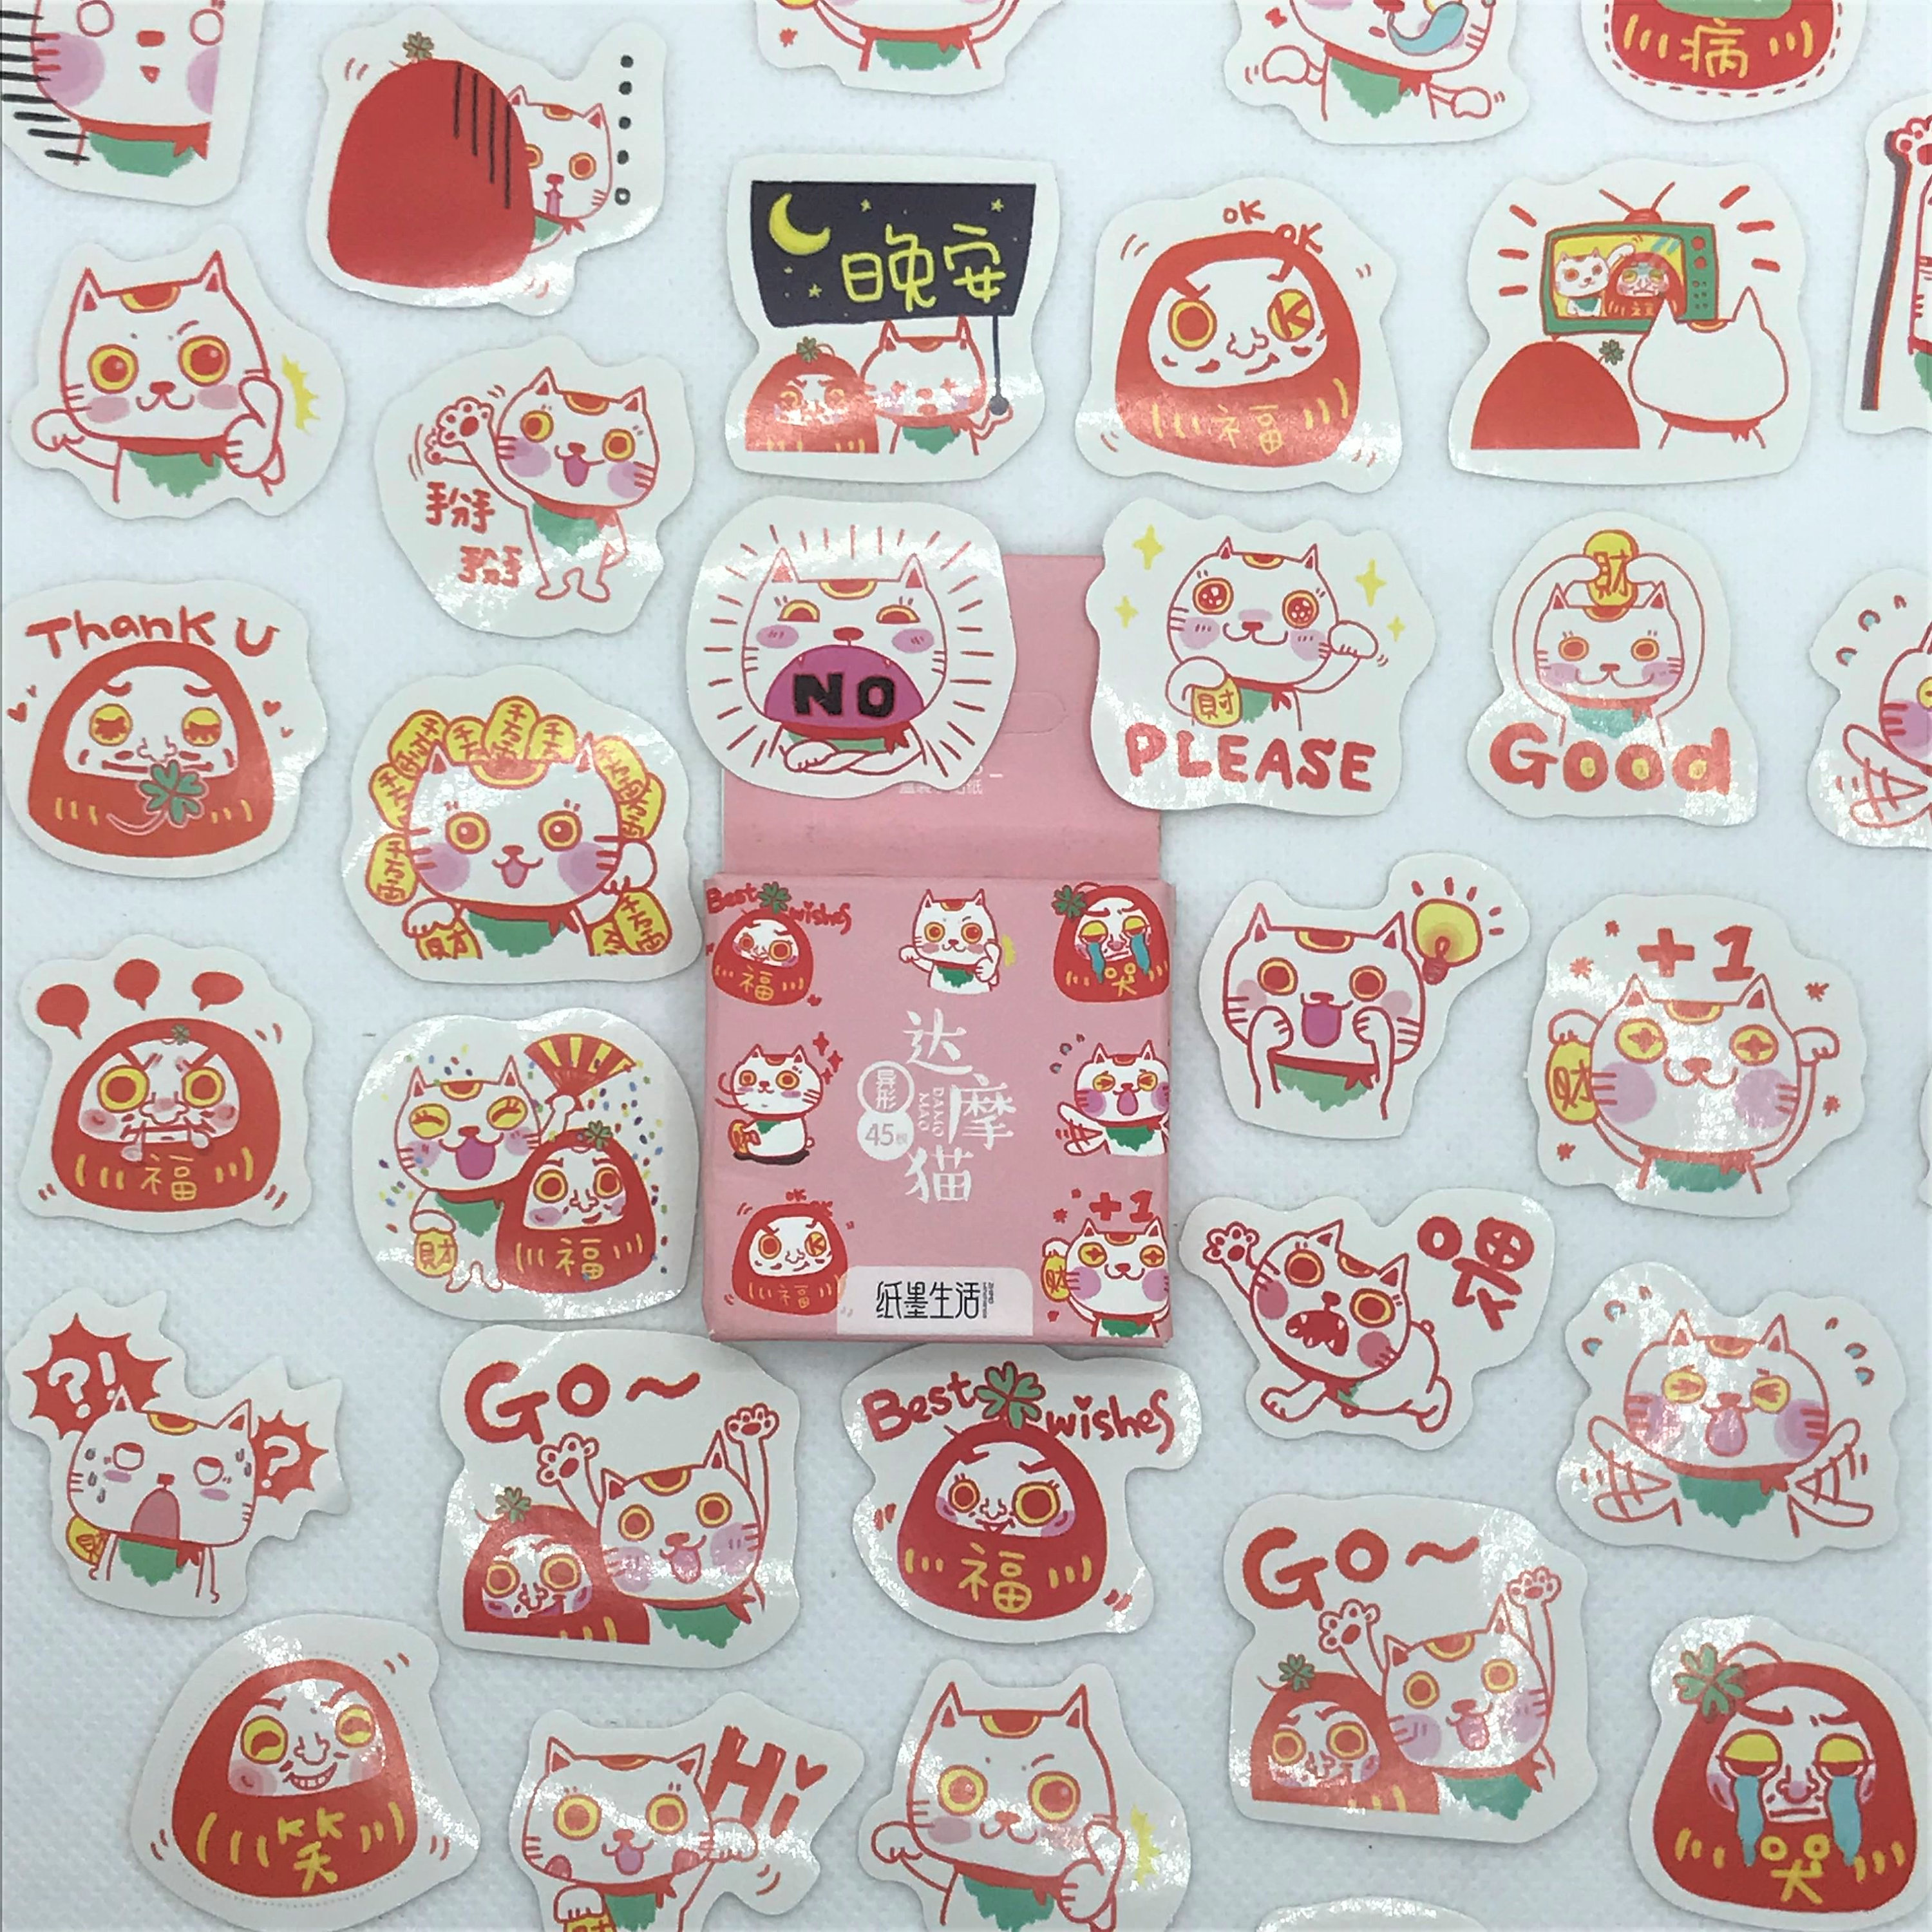 Kitsune Daruma - Daruma Doll - Sticker